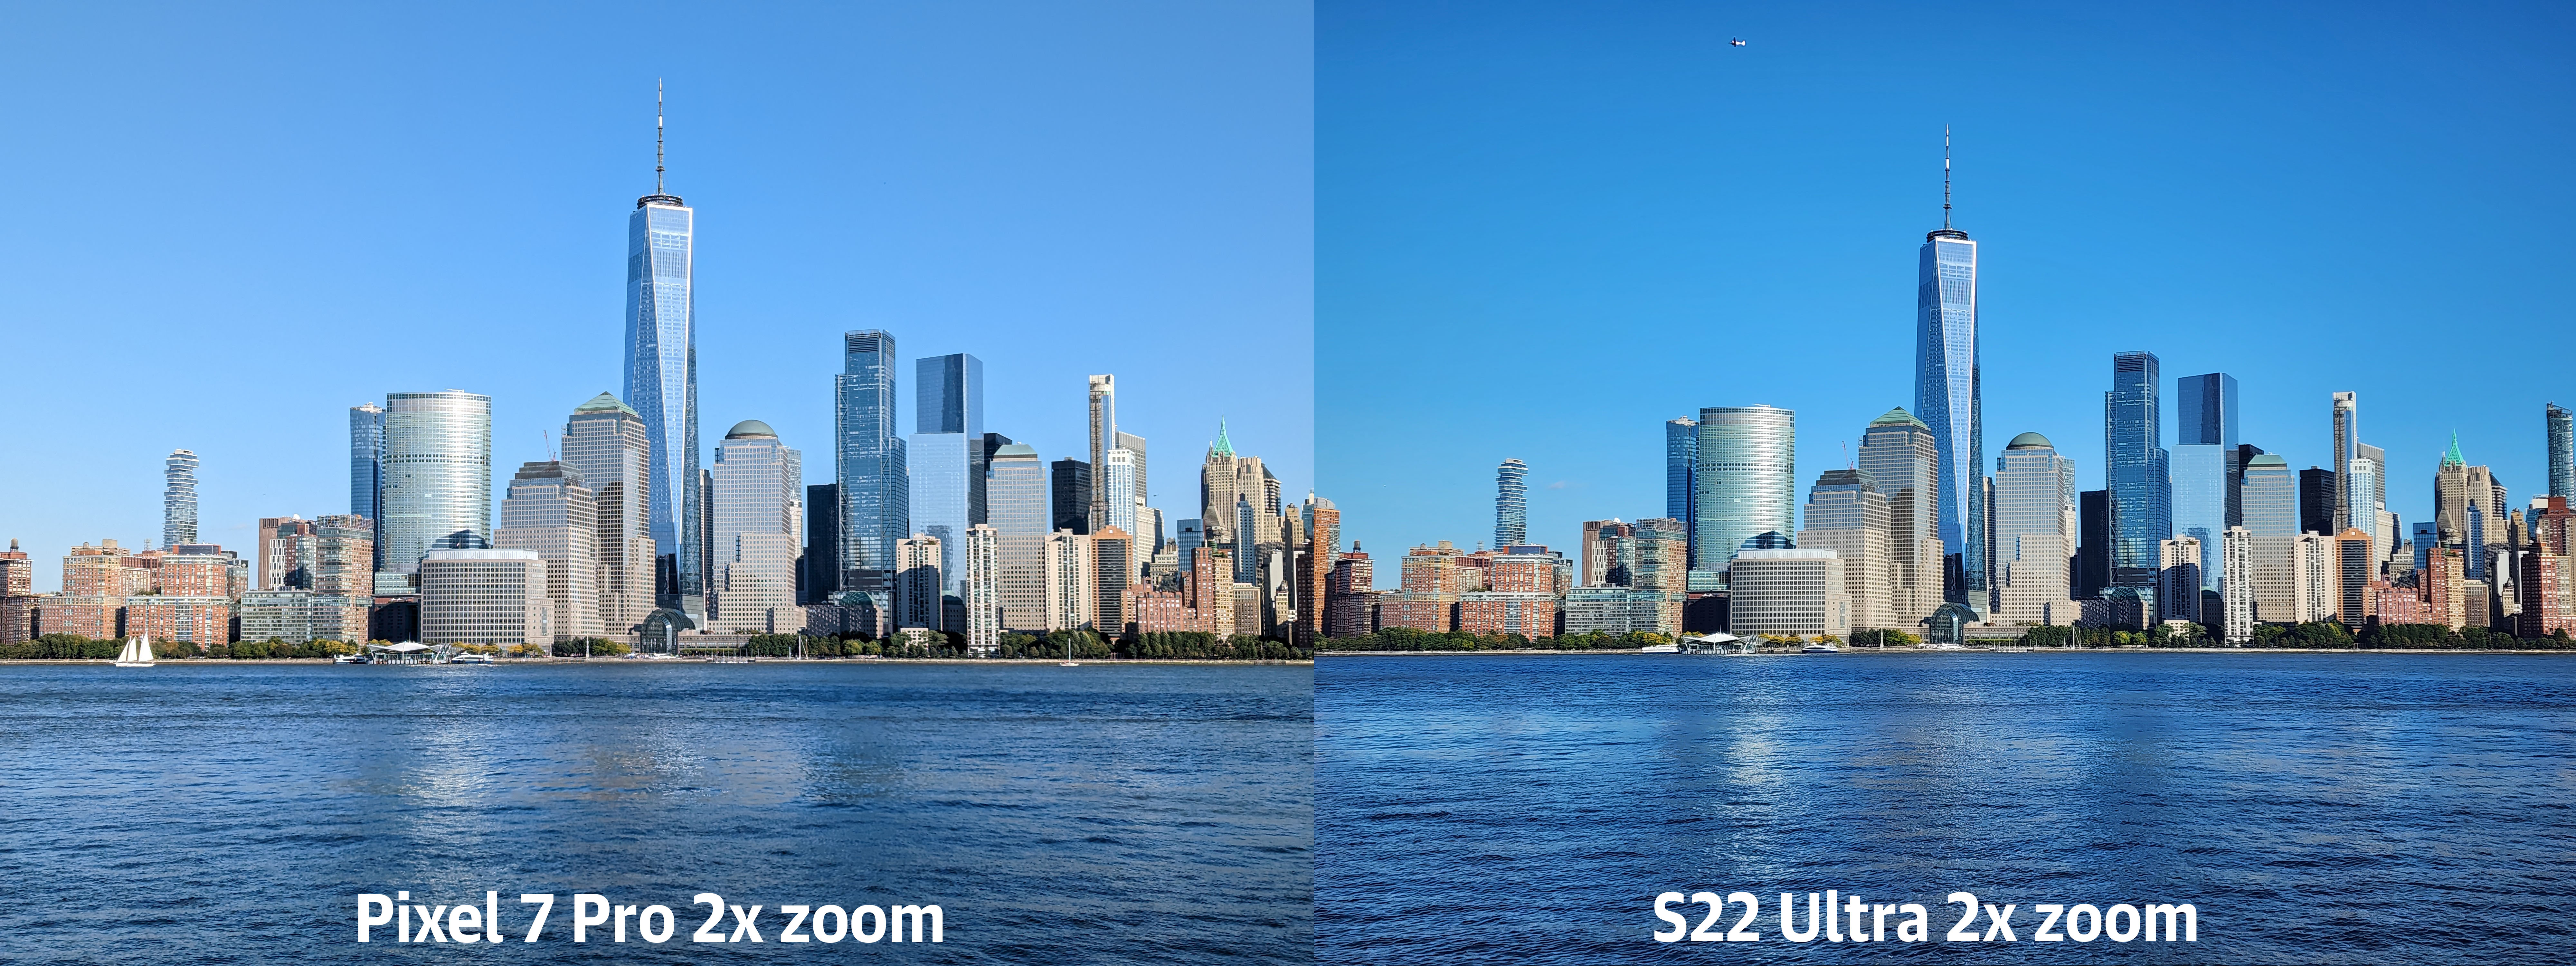 <p>Pixel 7 Pro 2x zoom vs S22 ultra</p>
